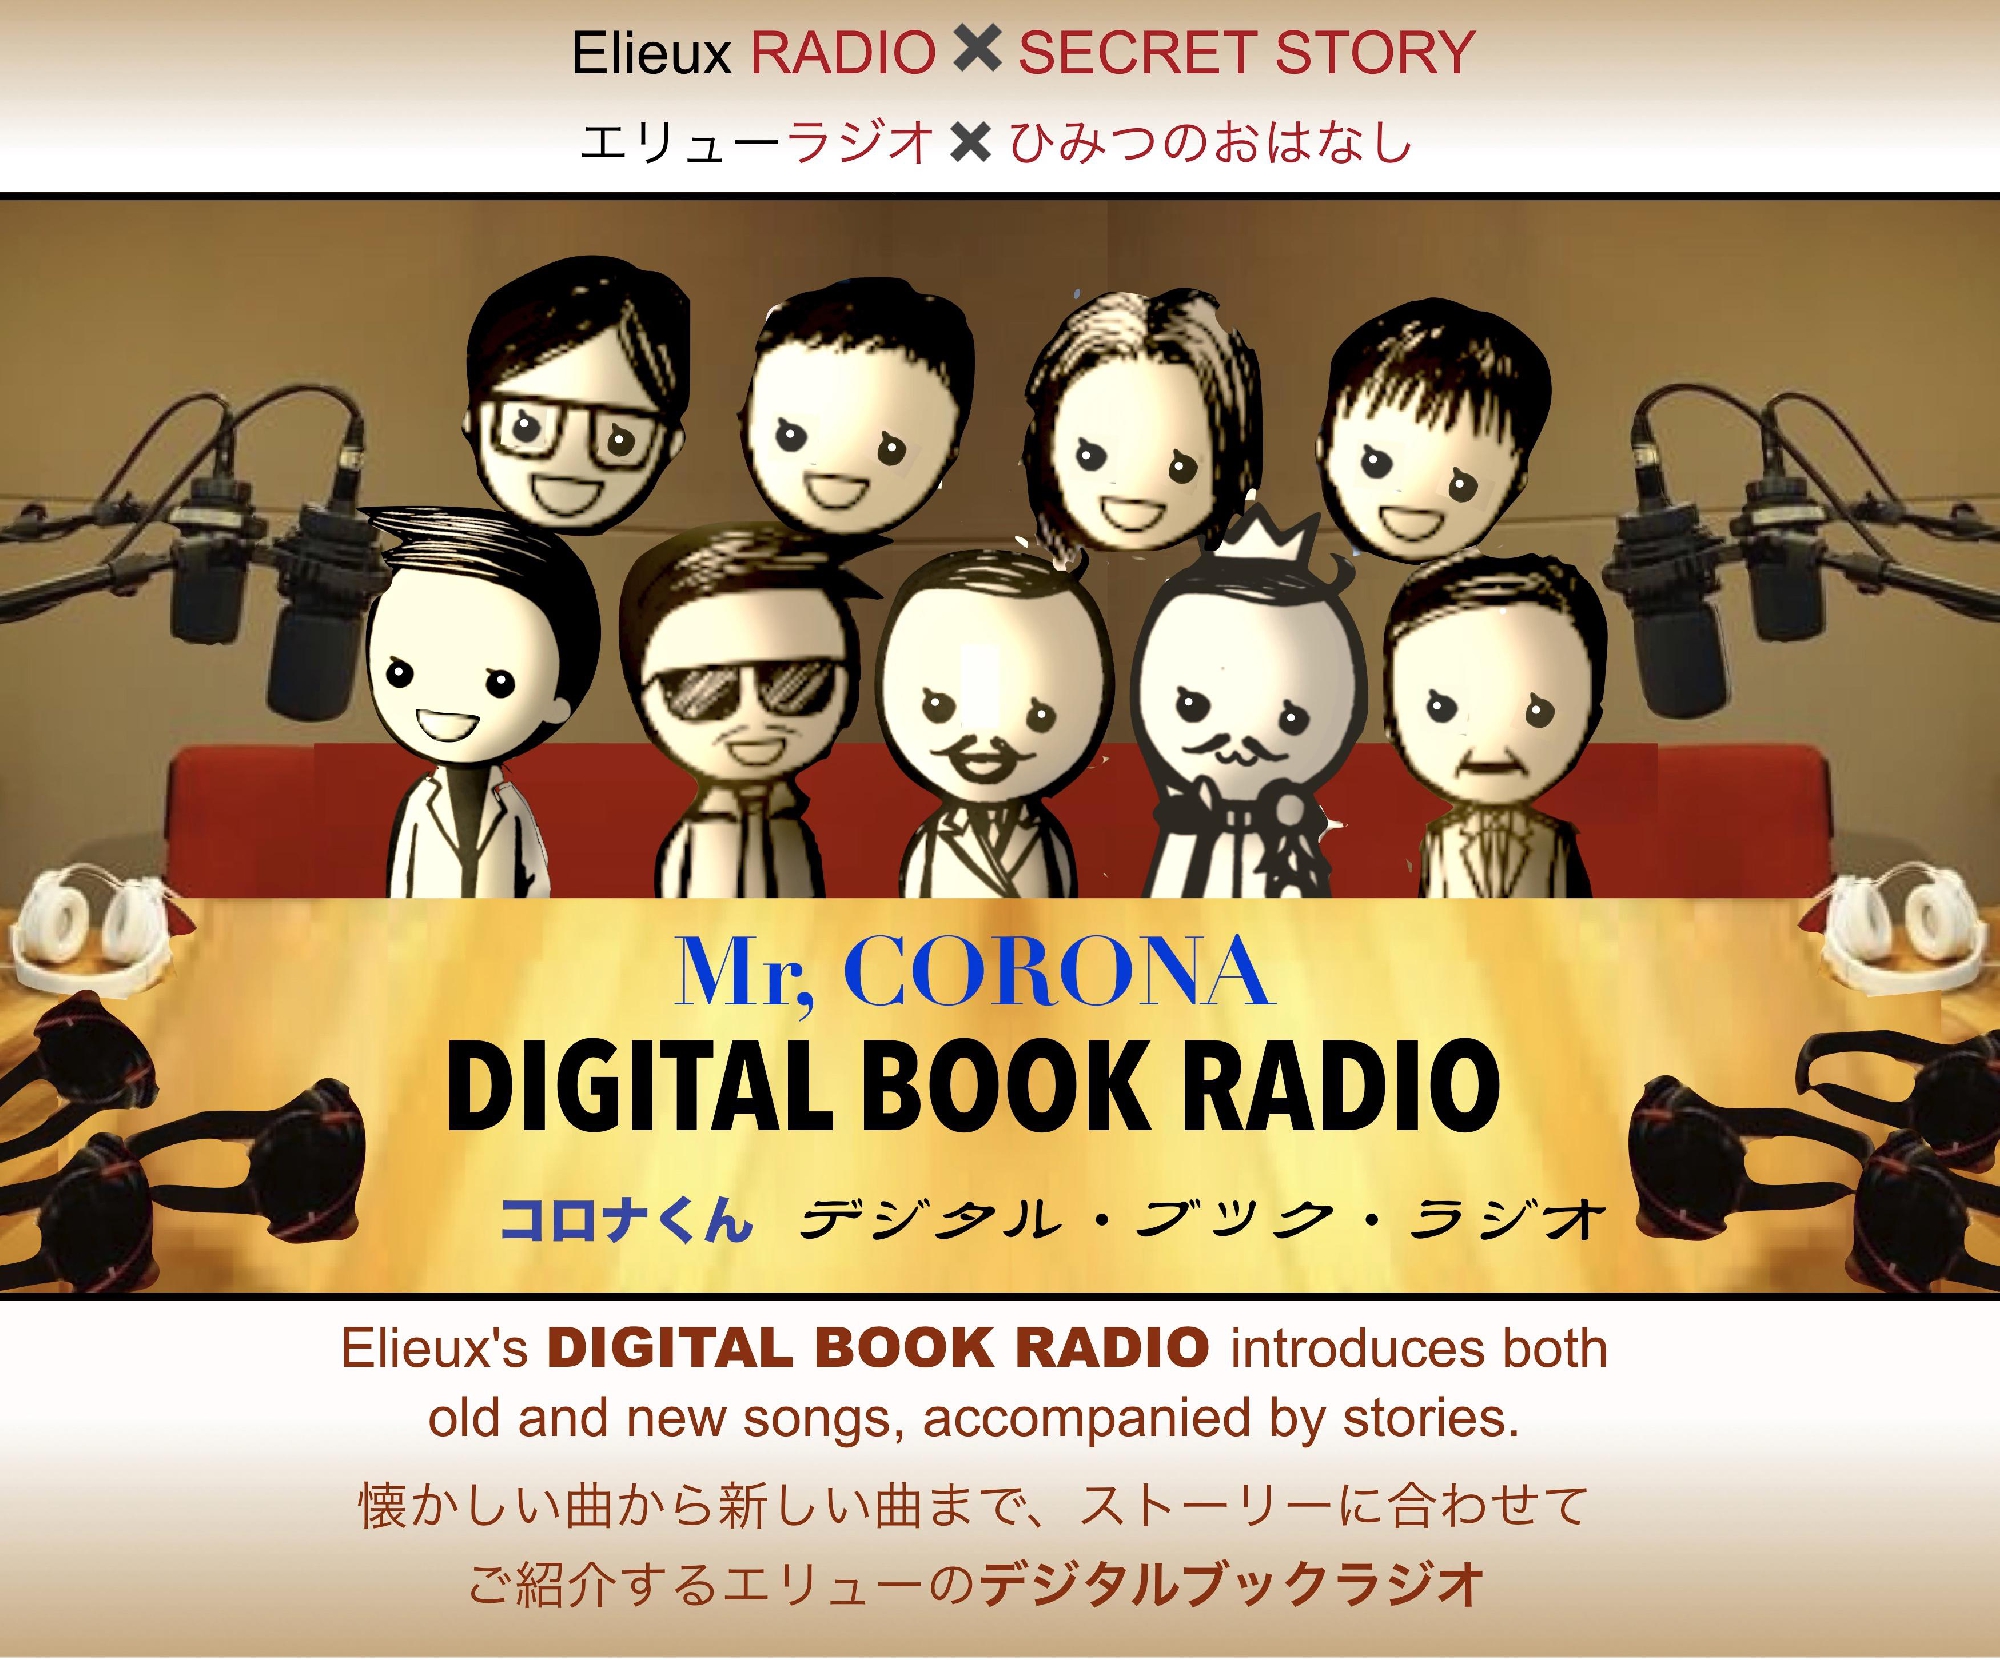 DIGITAL BOOK RADIO 2 "Mr. Corona" 「コロナくん」デジタルブックラジオ 3